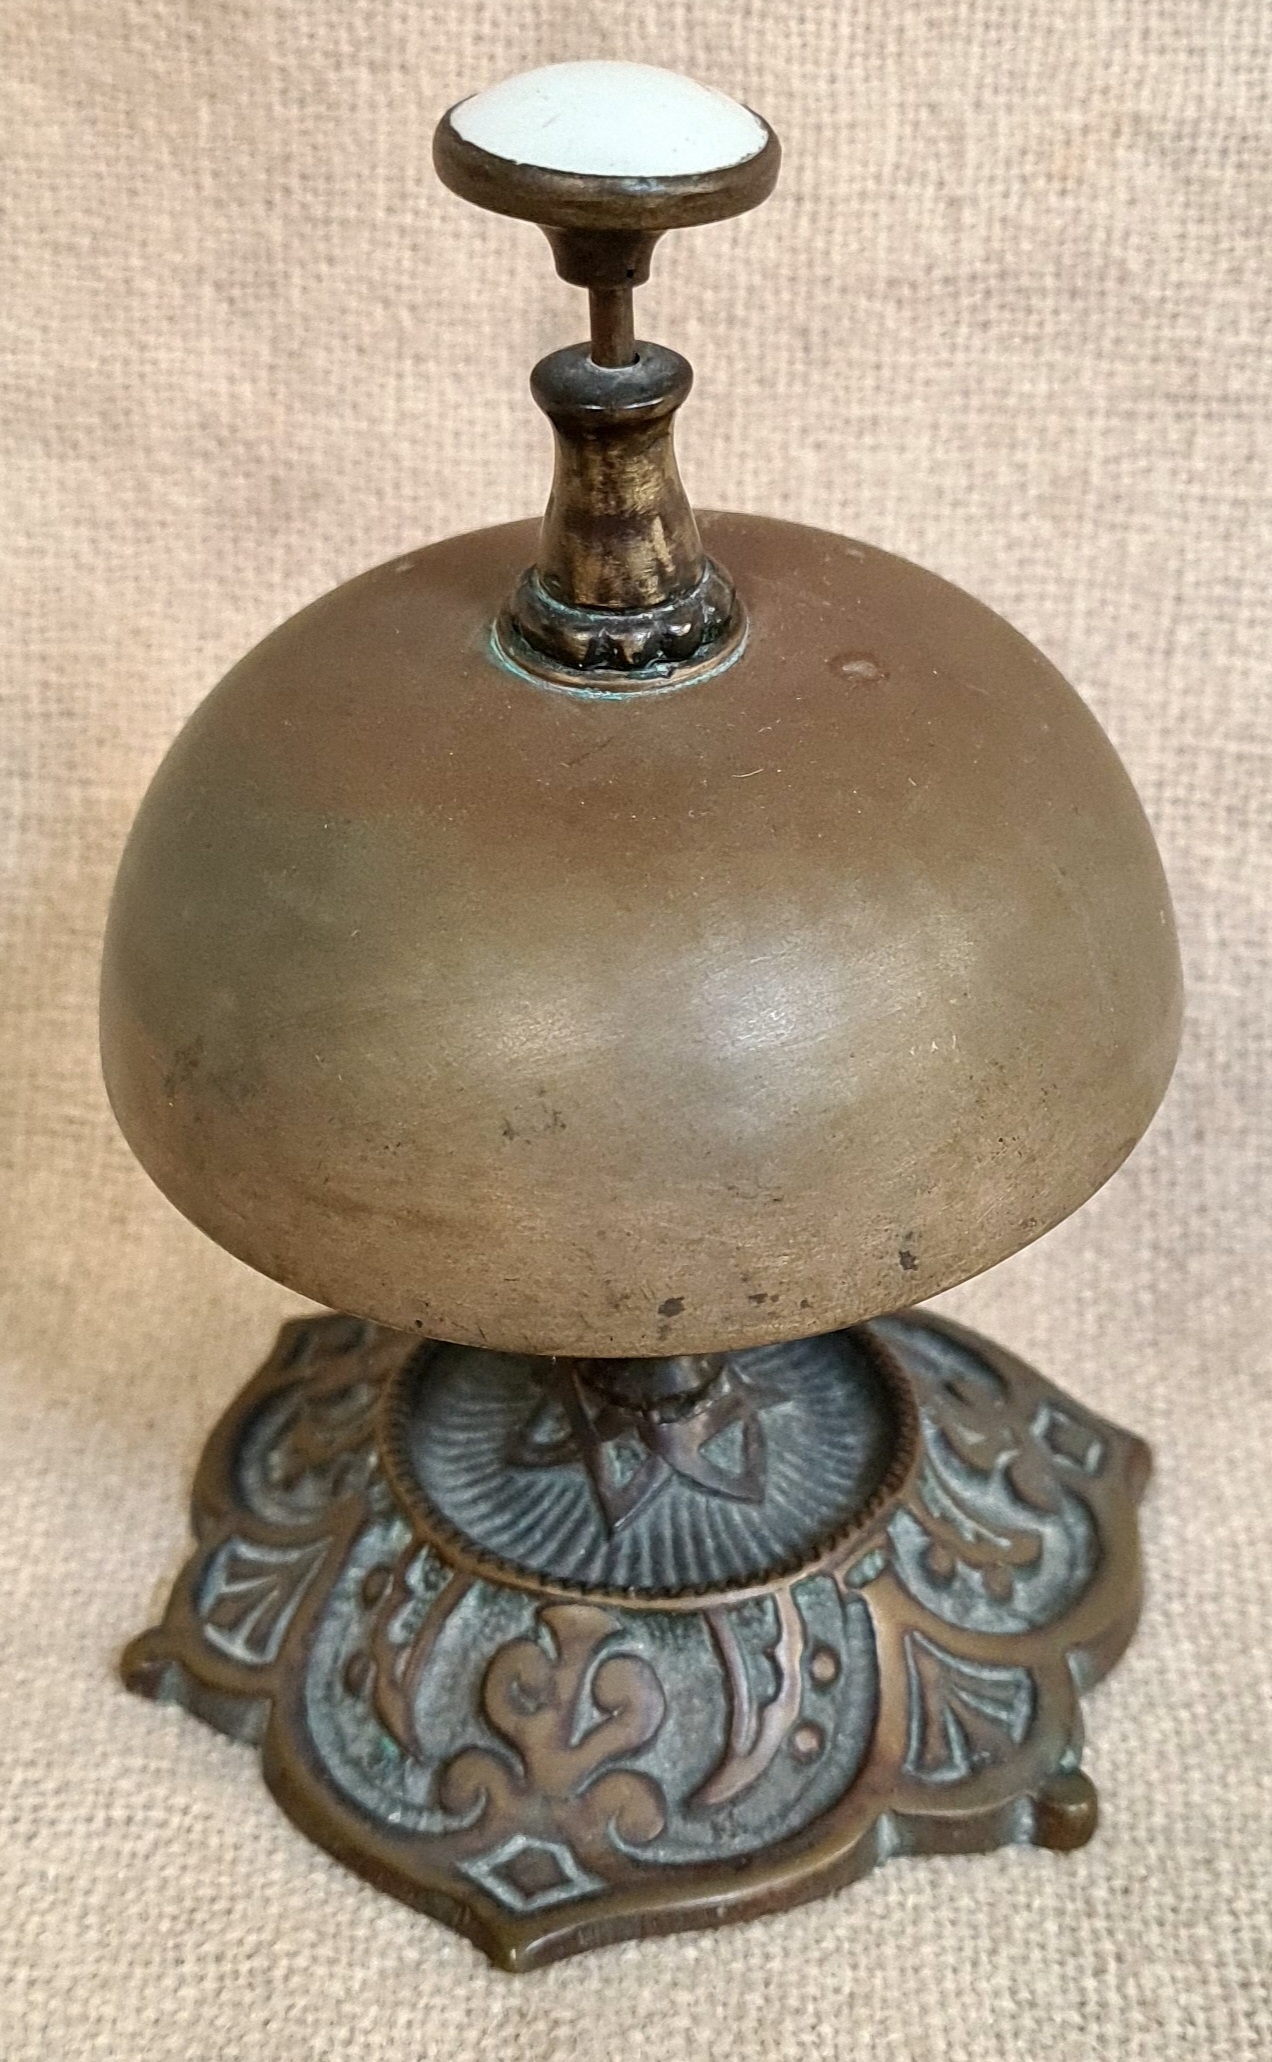 A vintage brass desk bell.